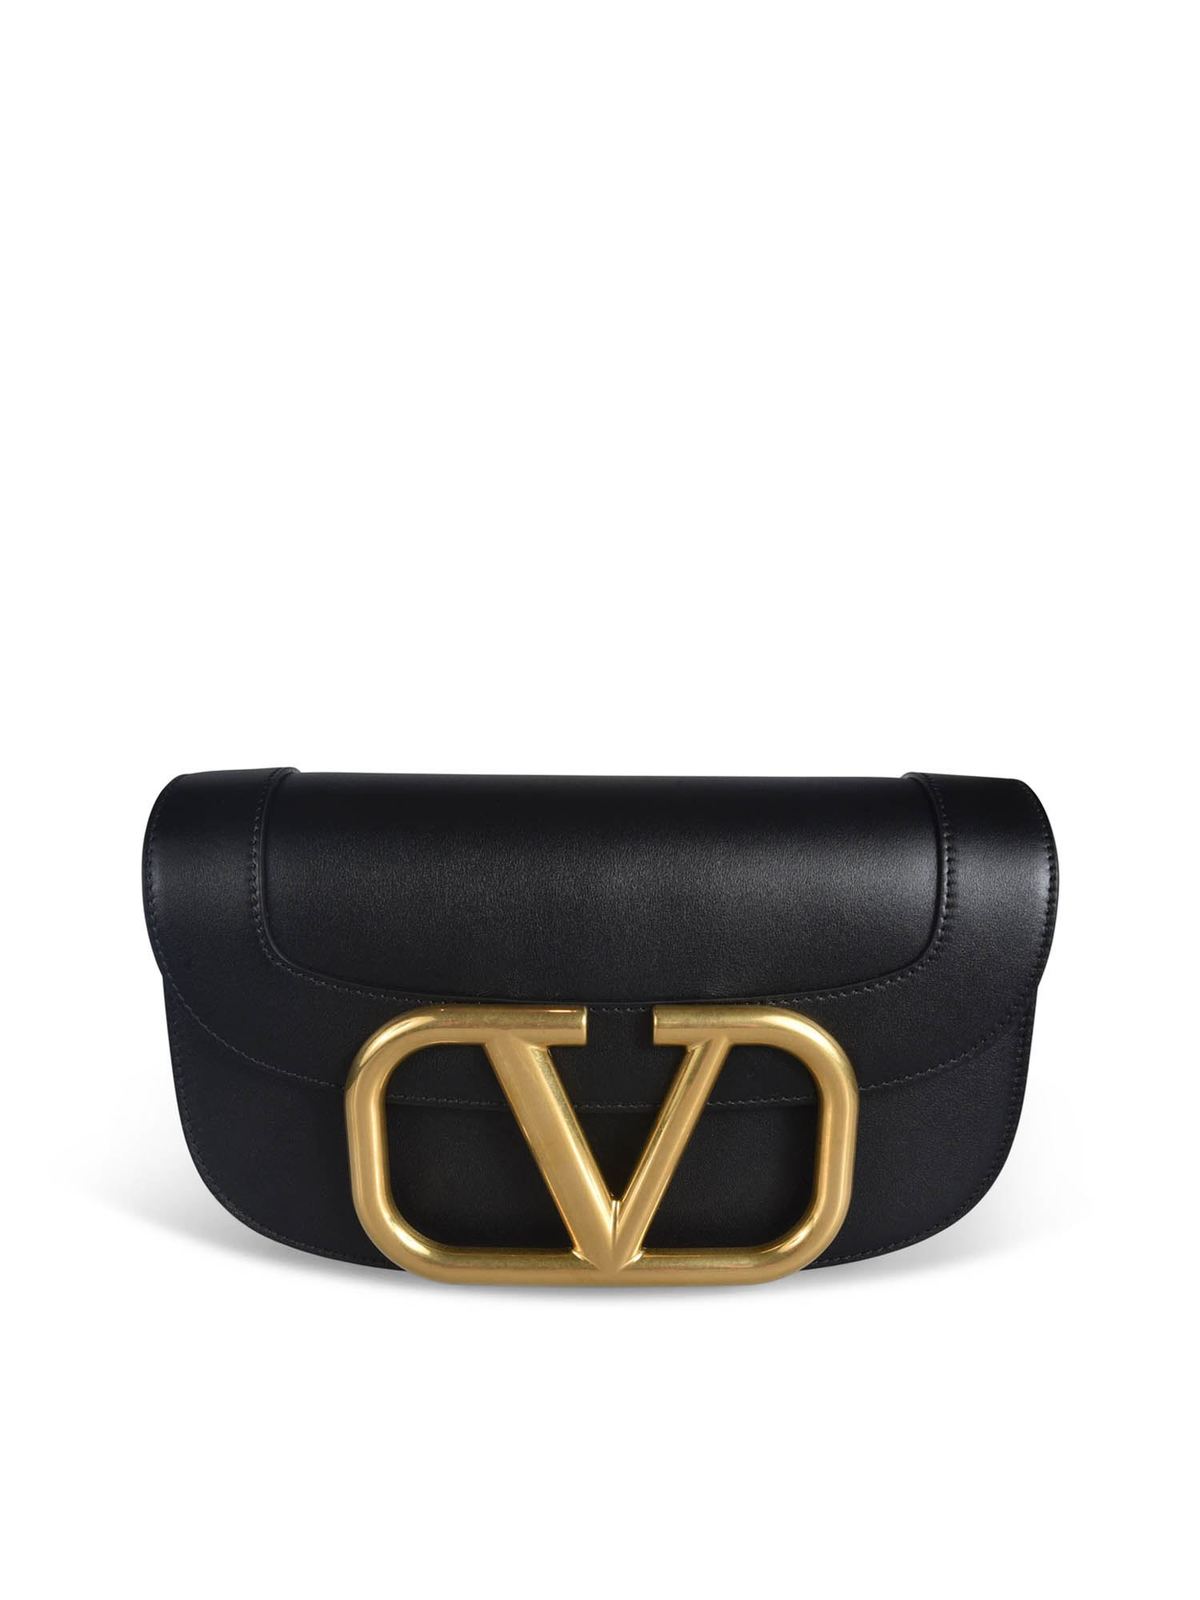 Supervee leather crossbody bag Valentino Garavani Black in Leather